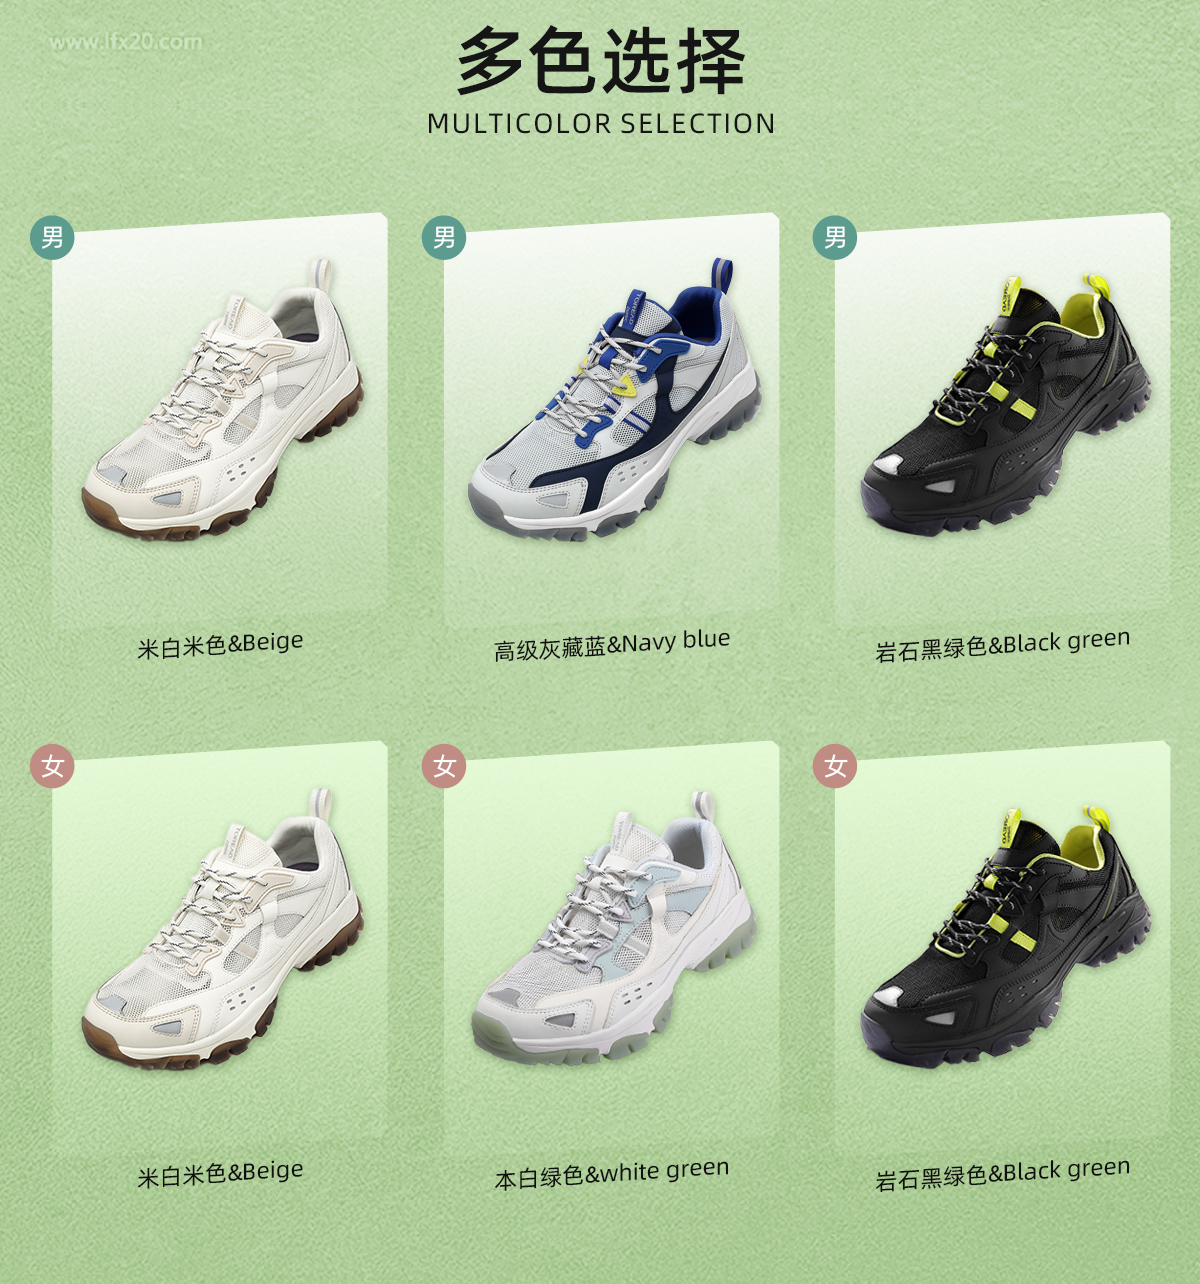 Liu haoran's same style of pathfinder hiking shoes 